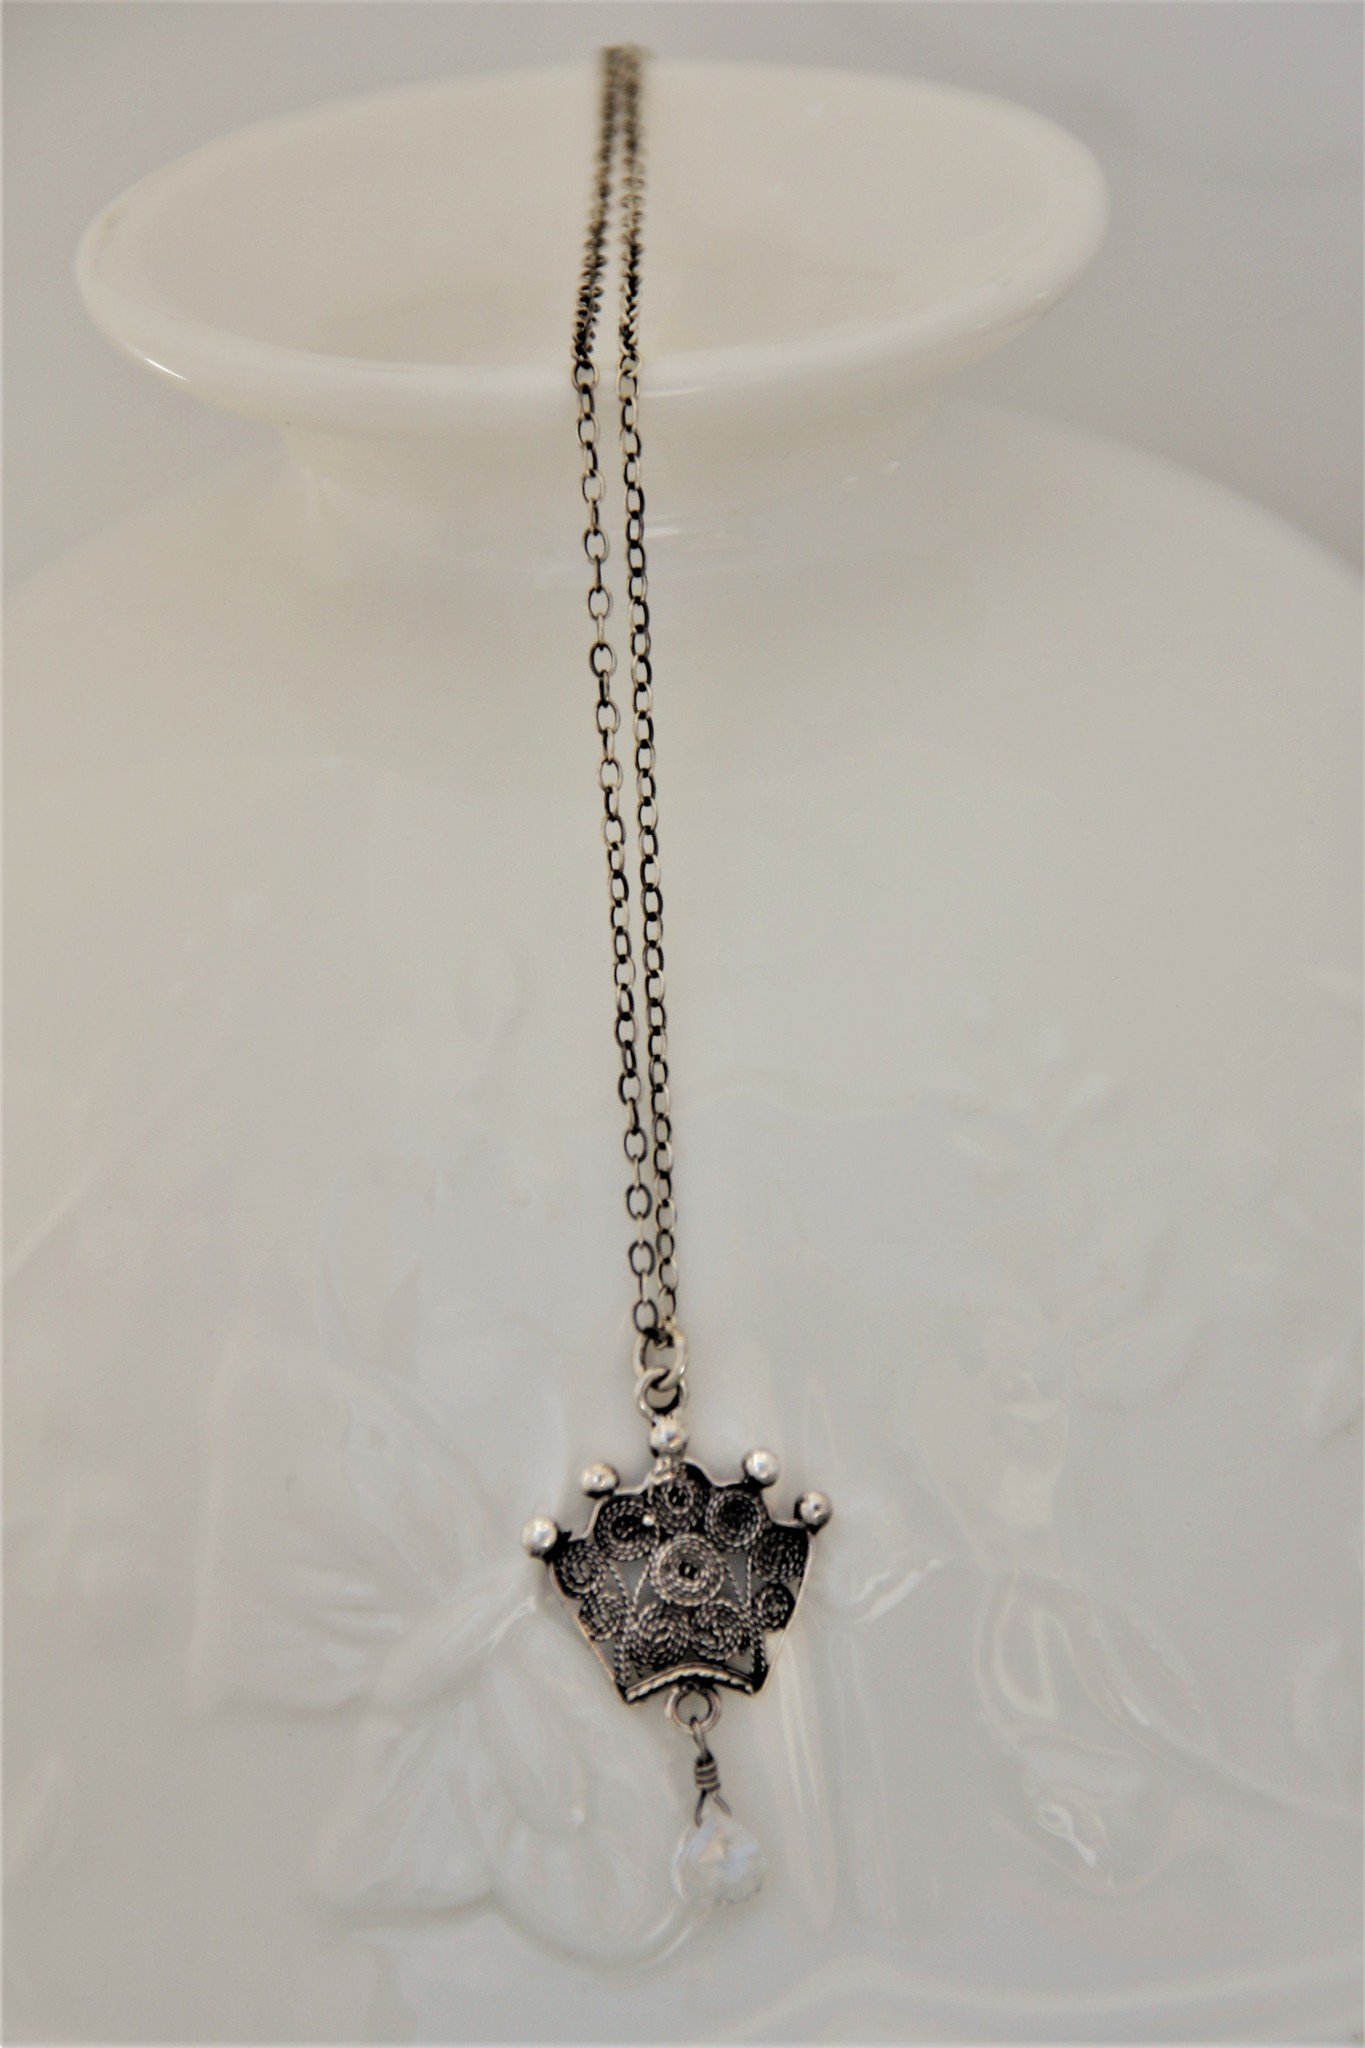 Yvone Christa Fine Yvone Christa necklace with filigree pendant